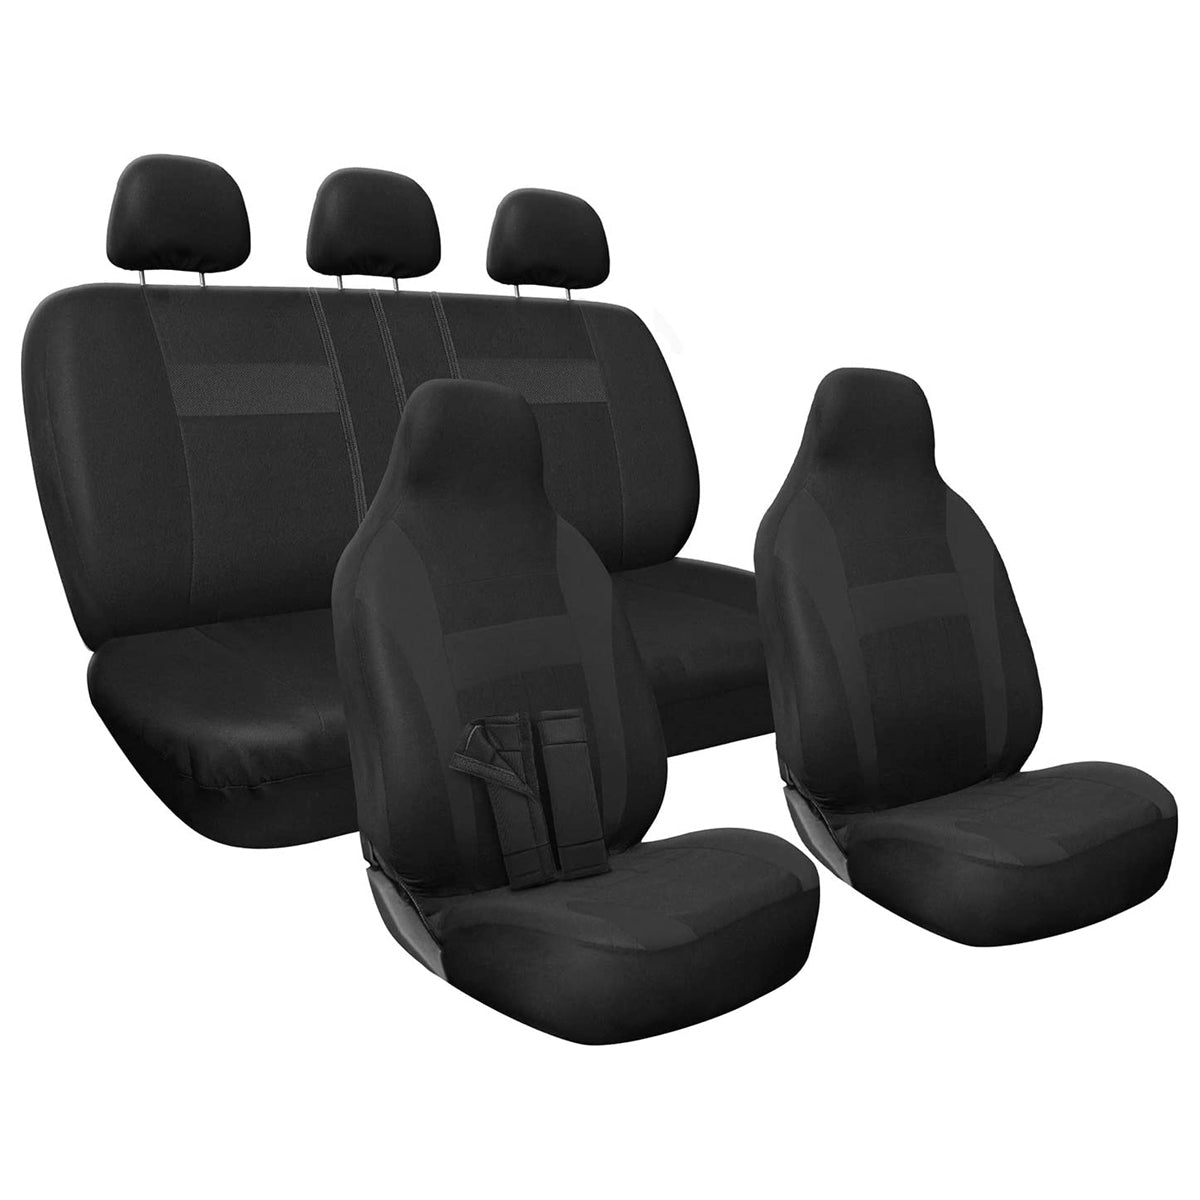 OxGord 10Pc Seat Cover Set for Car, Truck, SUV - Cloth, Solid Black